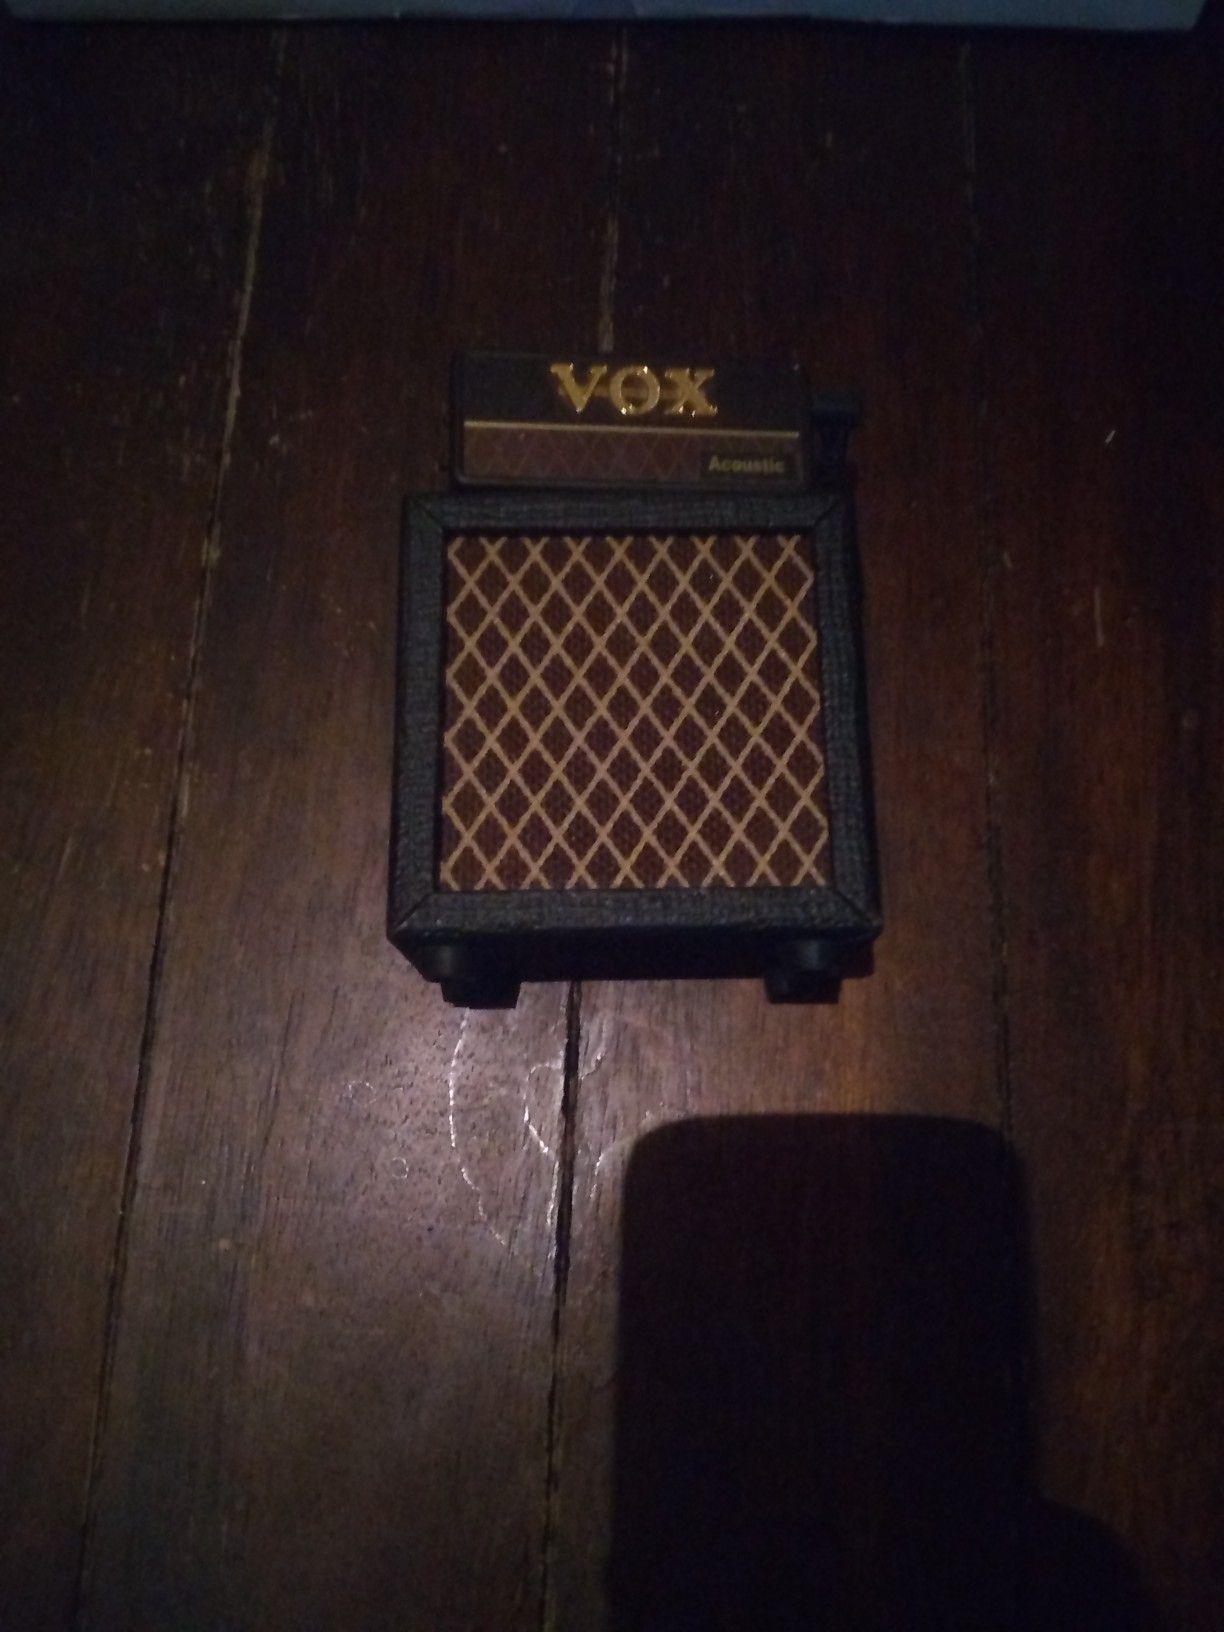 Vox mini amp/speaker